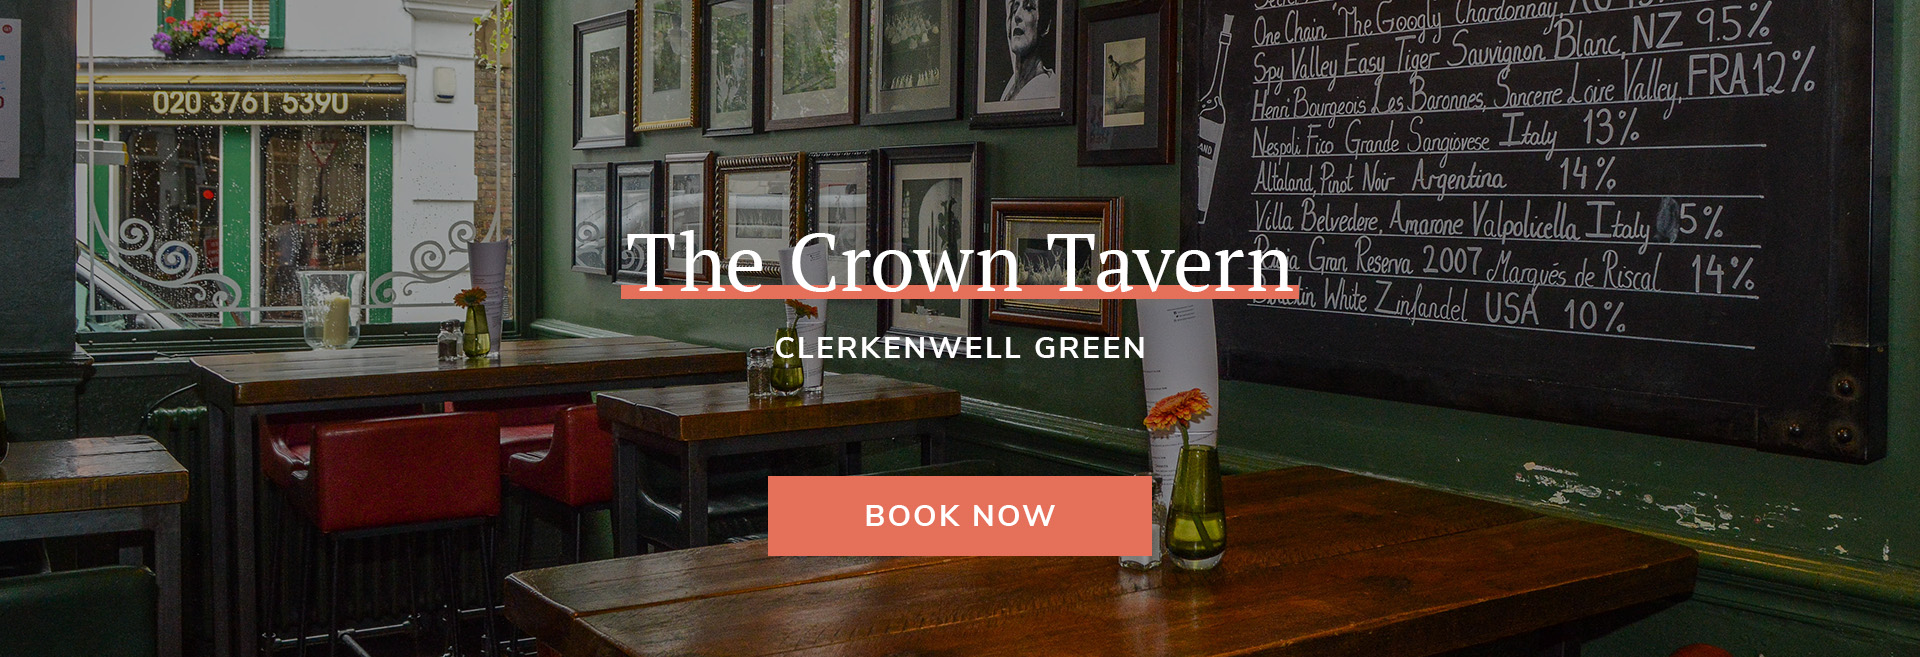 The Crown Tavern Banner 3